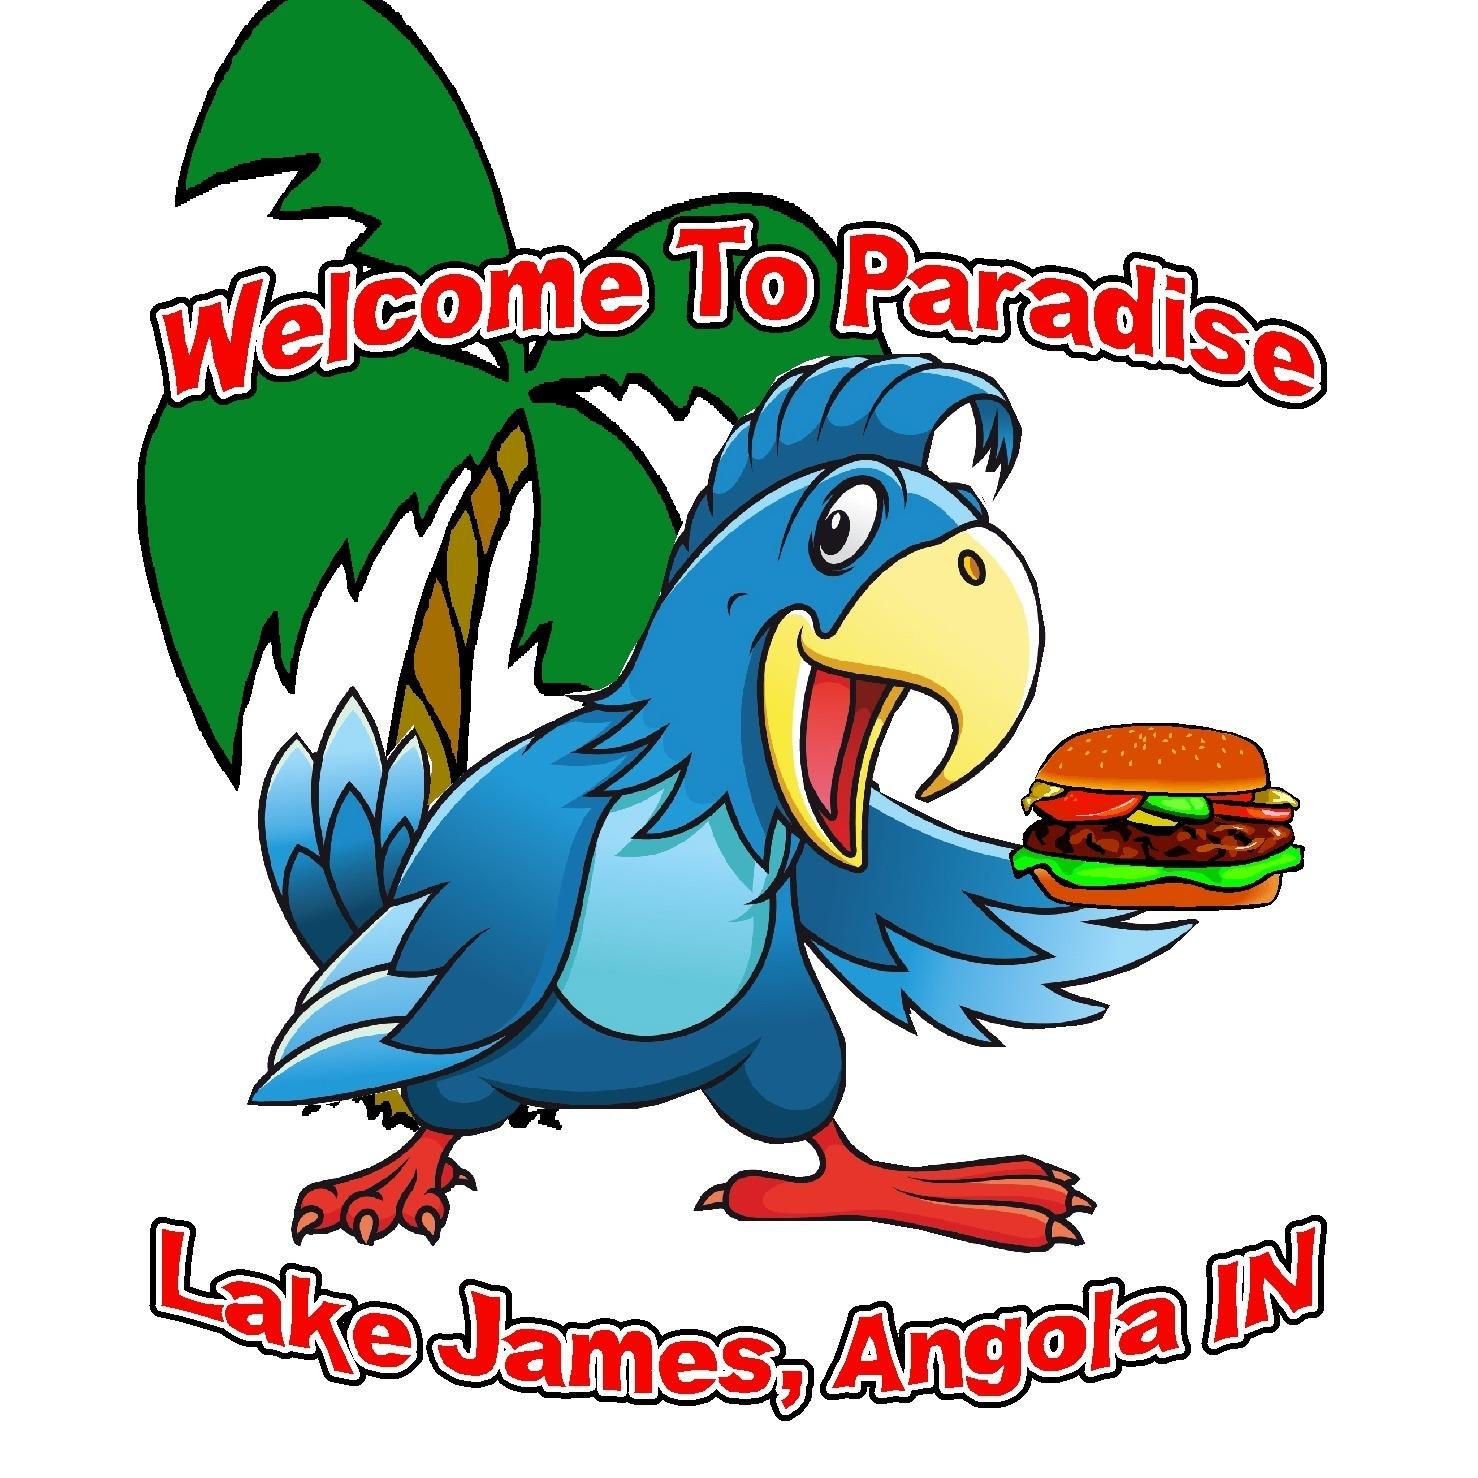 Club Paradise Logo